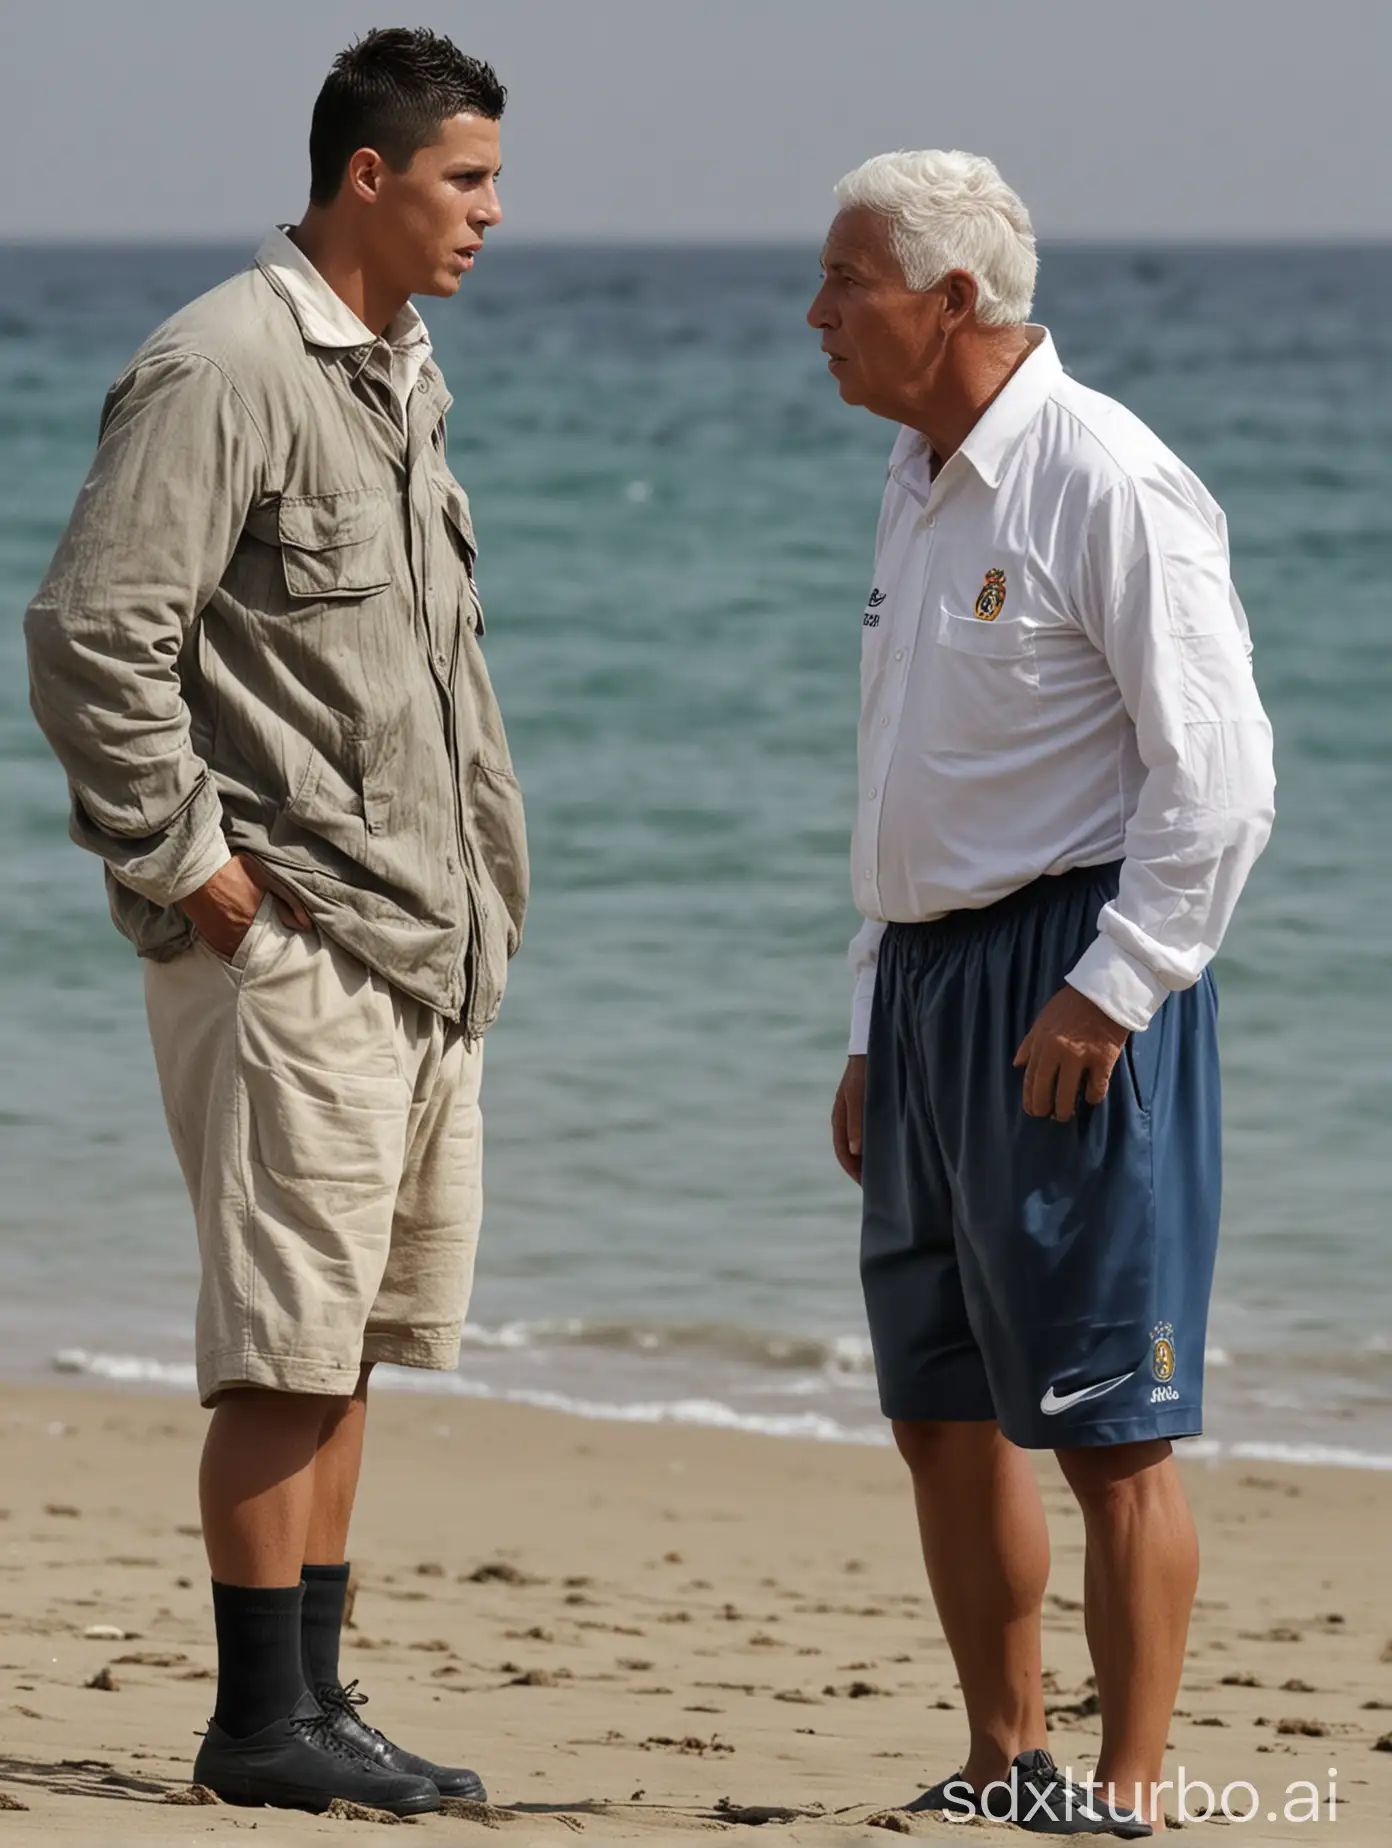 Elderly-Fisherman-Sharing-Wisdom-with-Attentive-Listener-Ronaldo